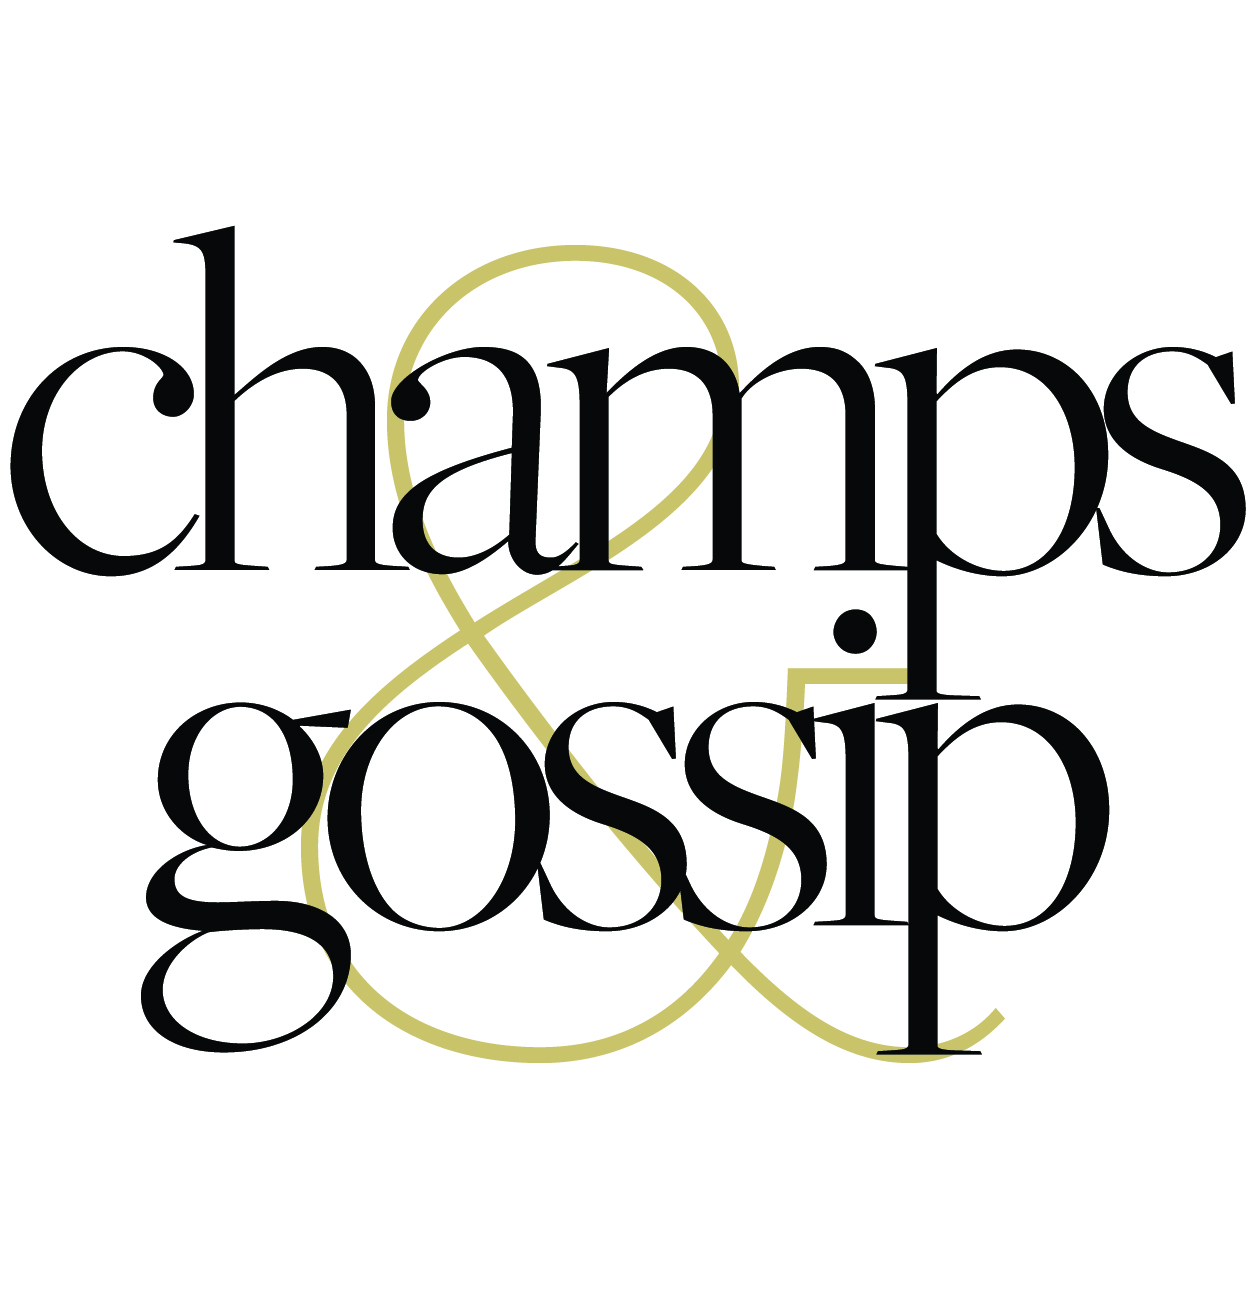 Champs & Gossip